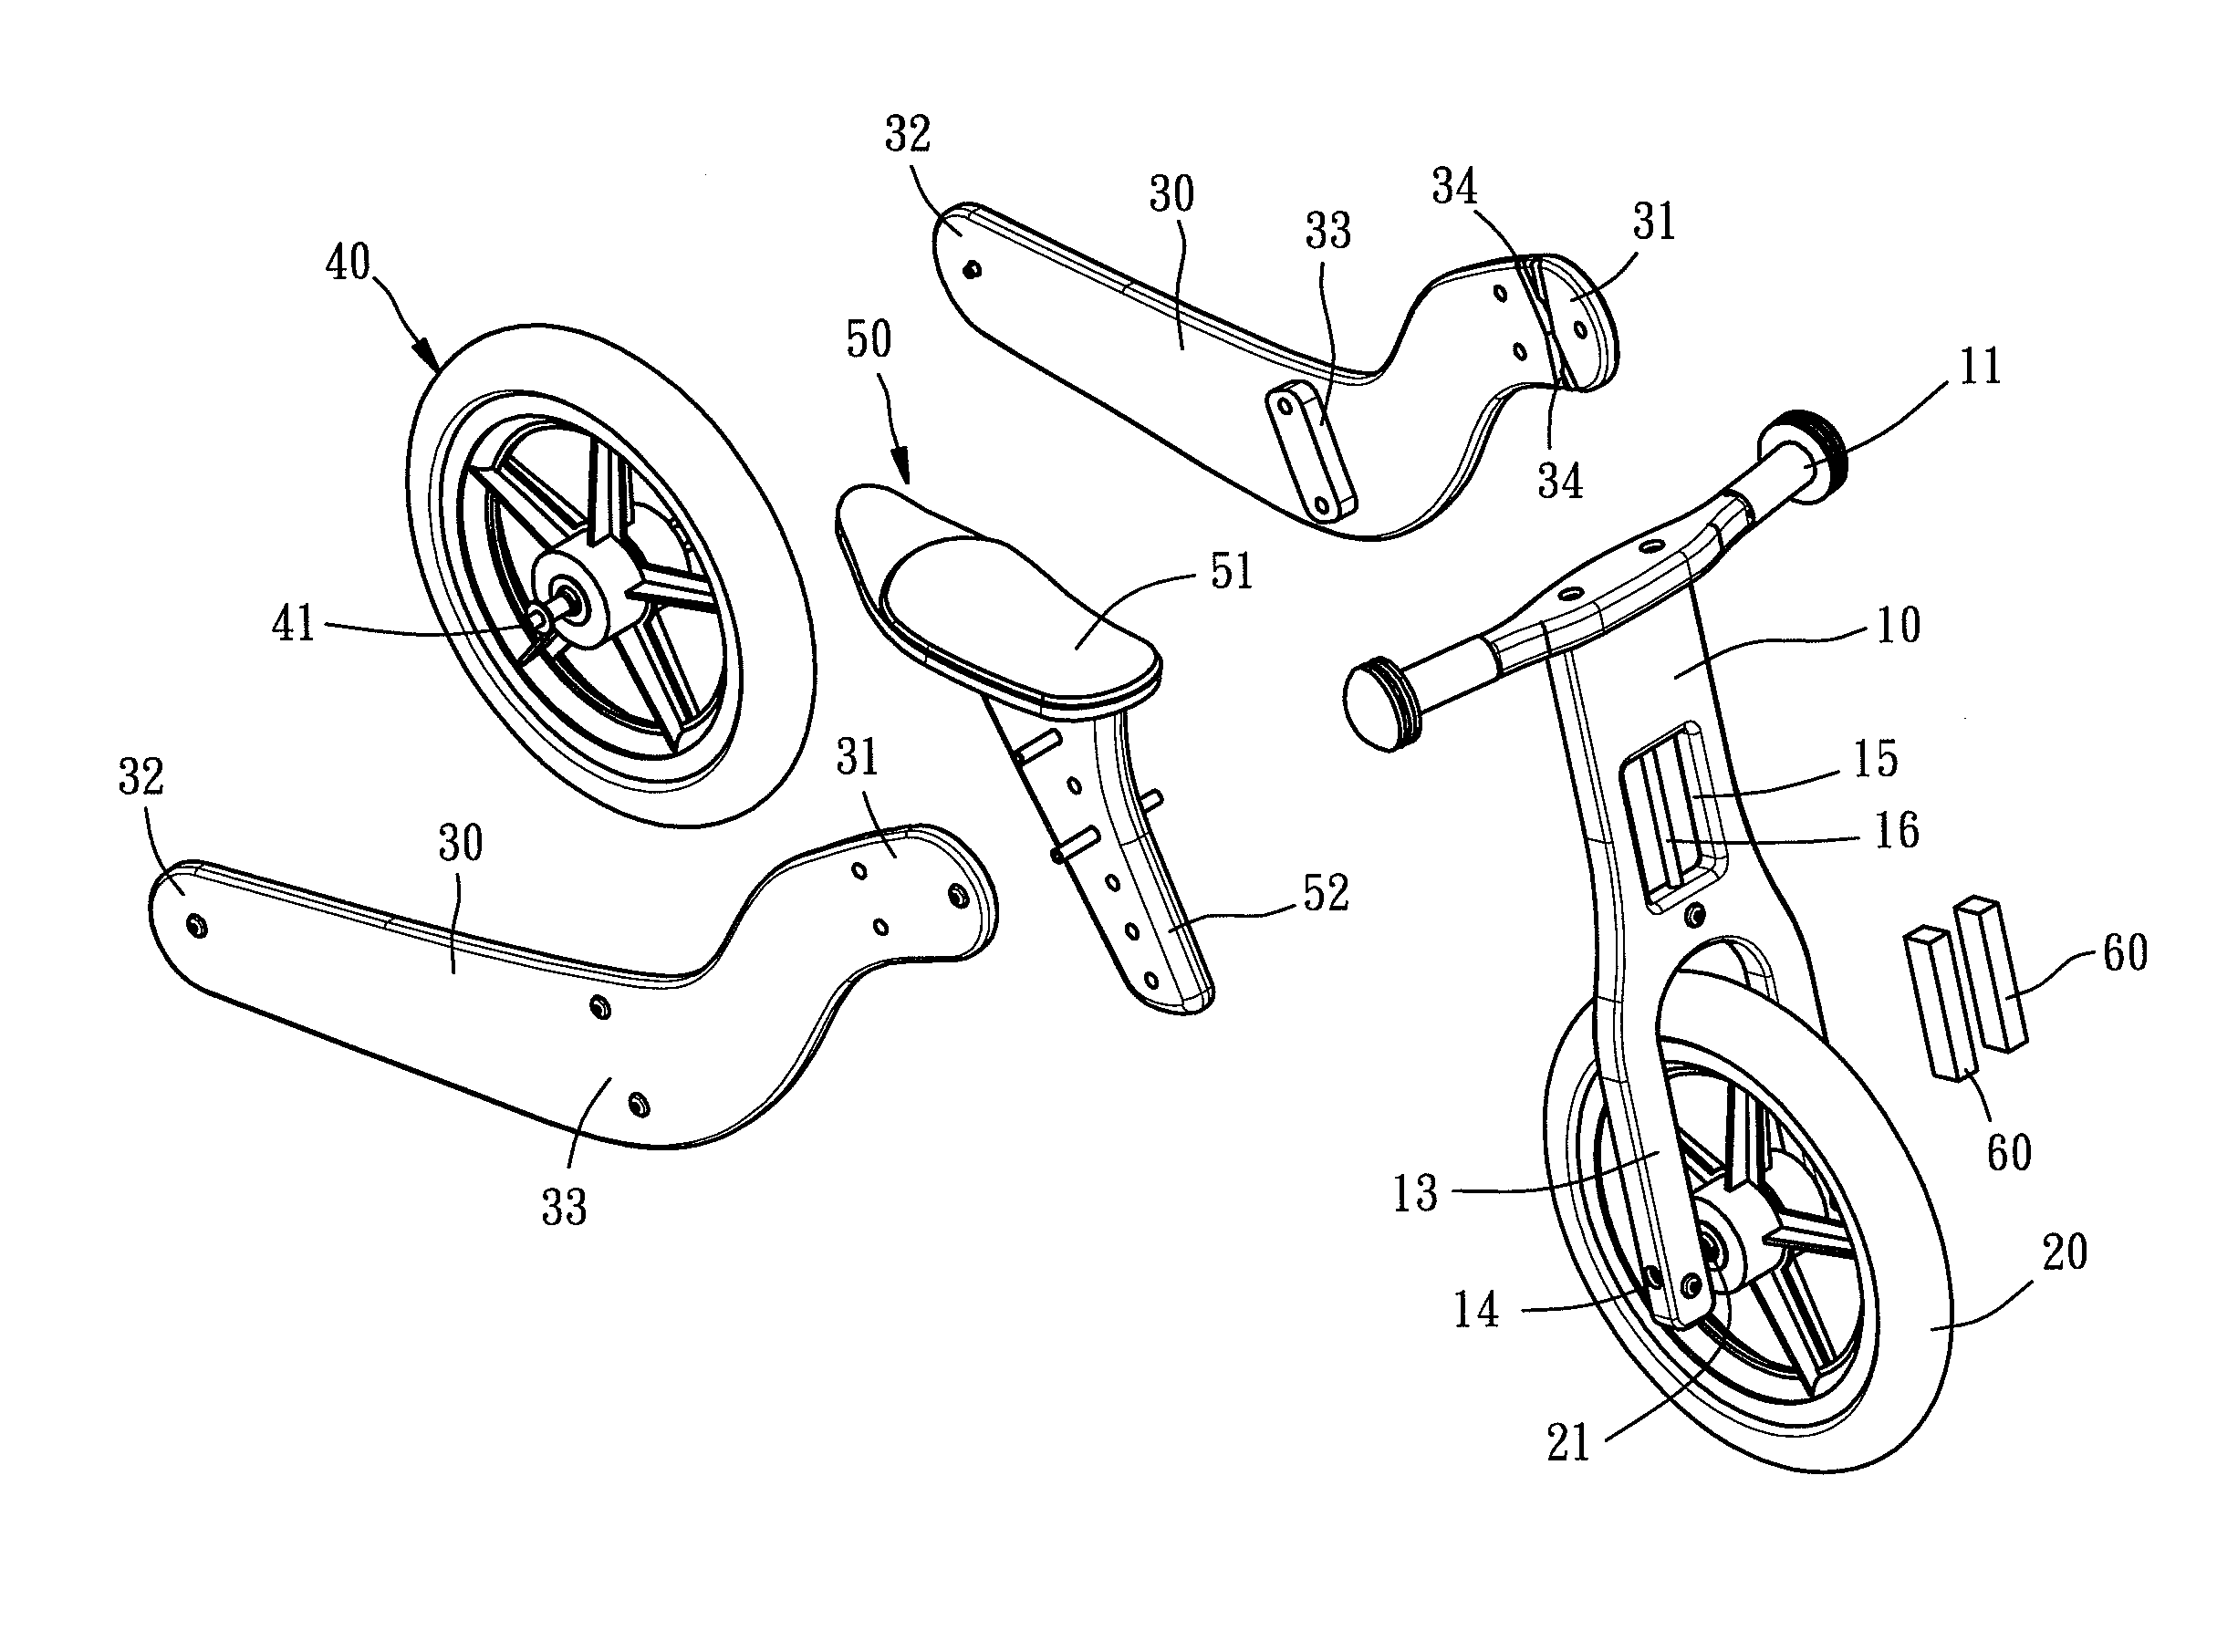 Easy-to-assemble multipurpose pushbike